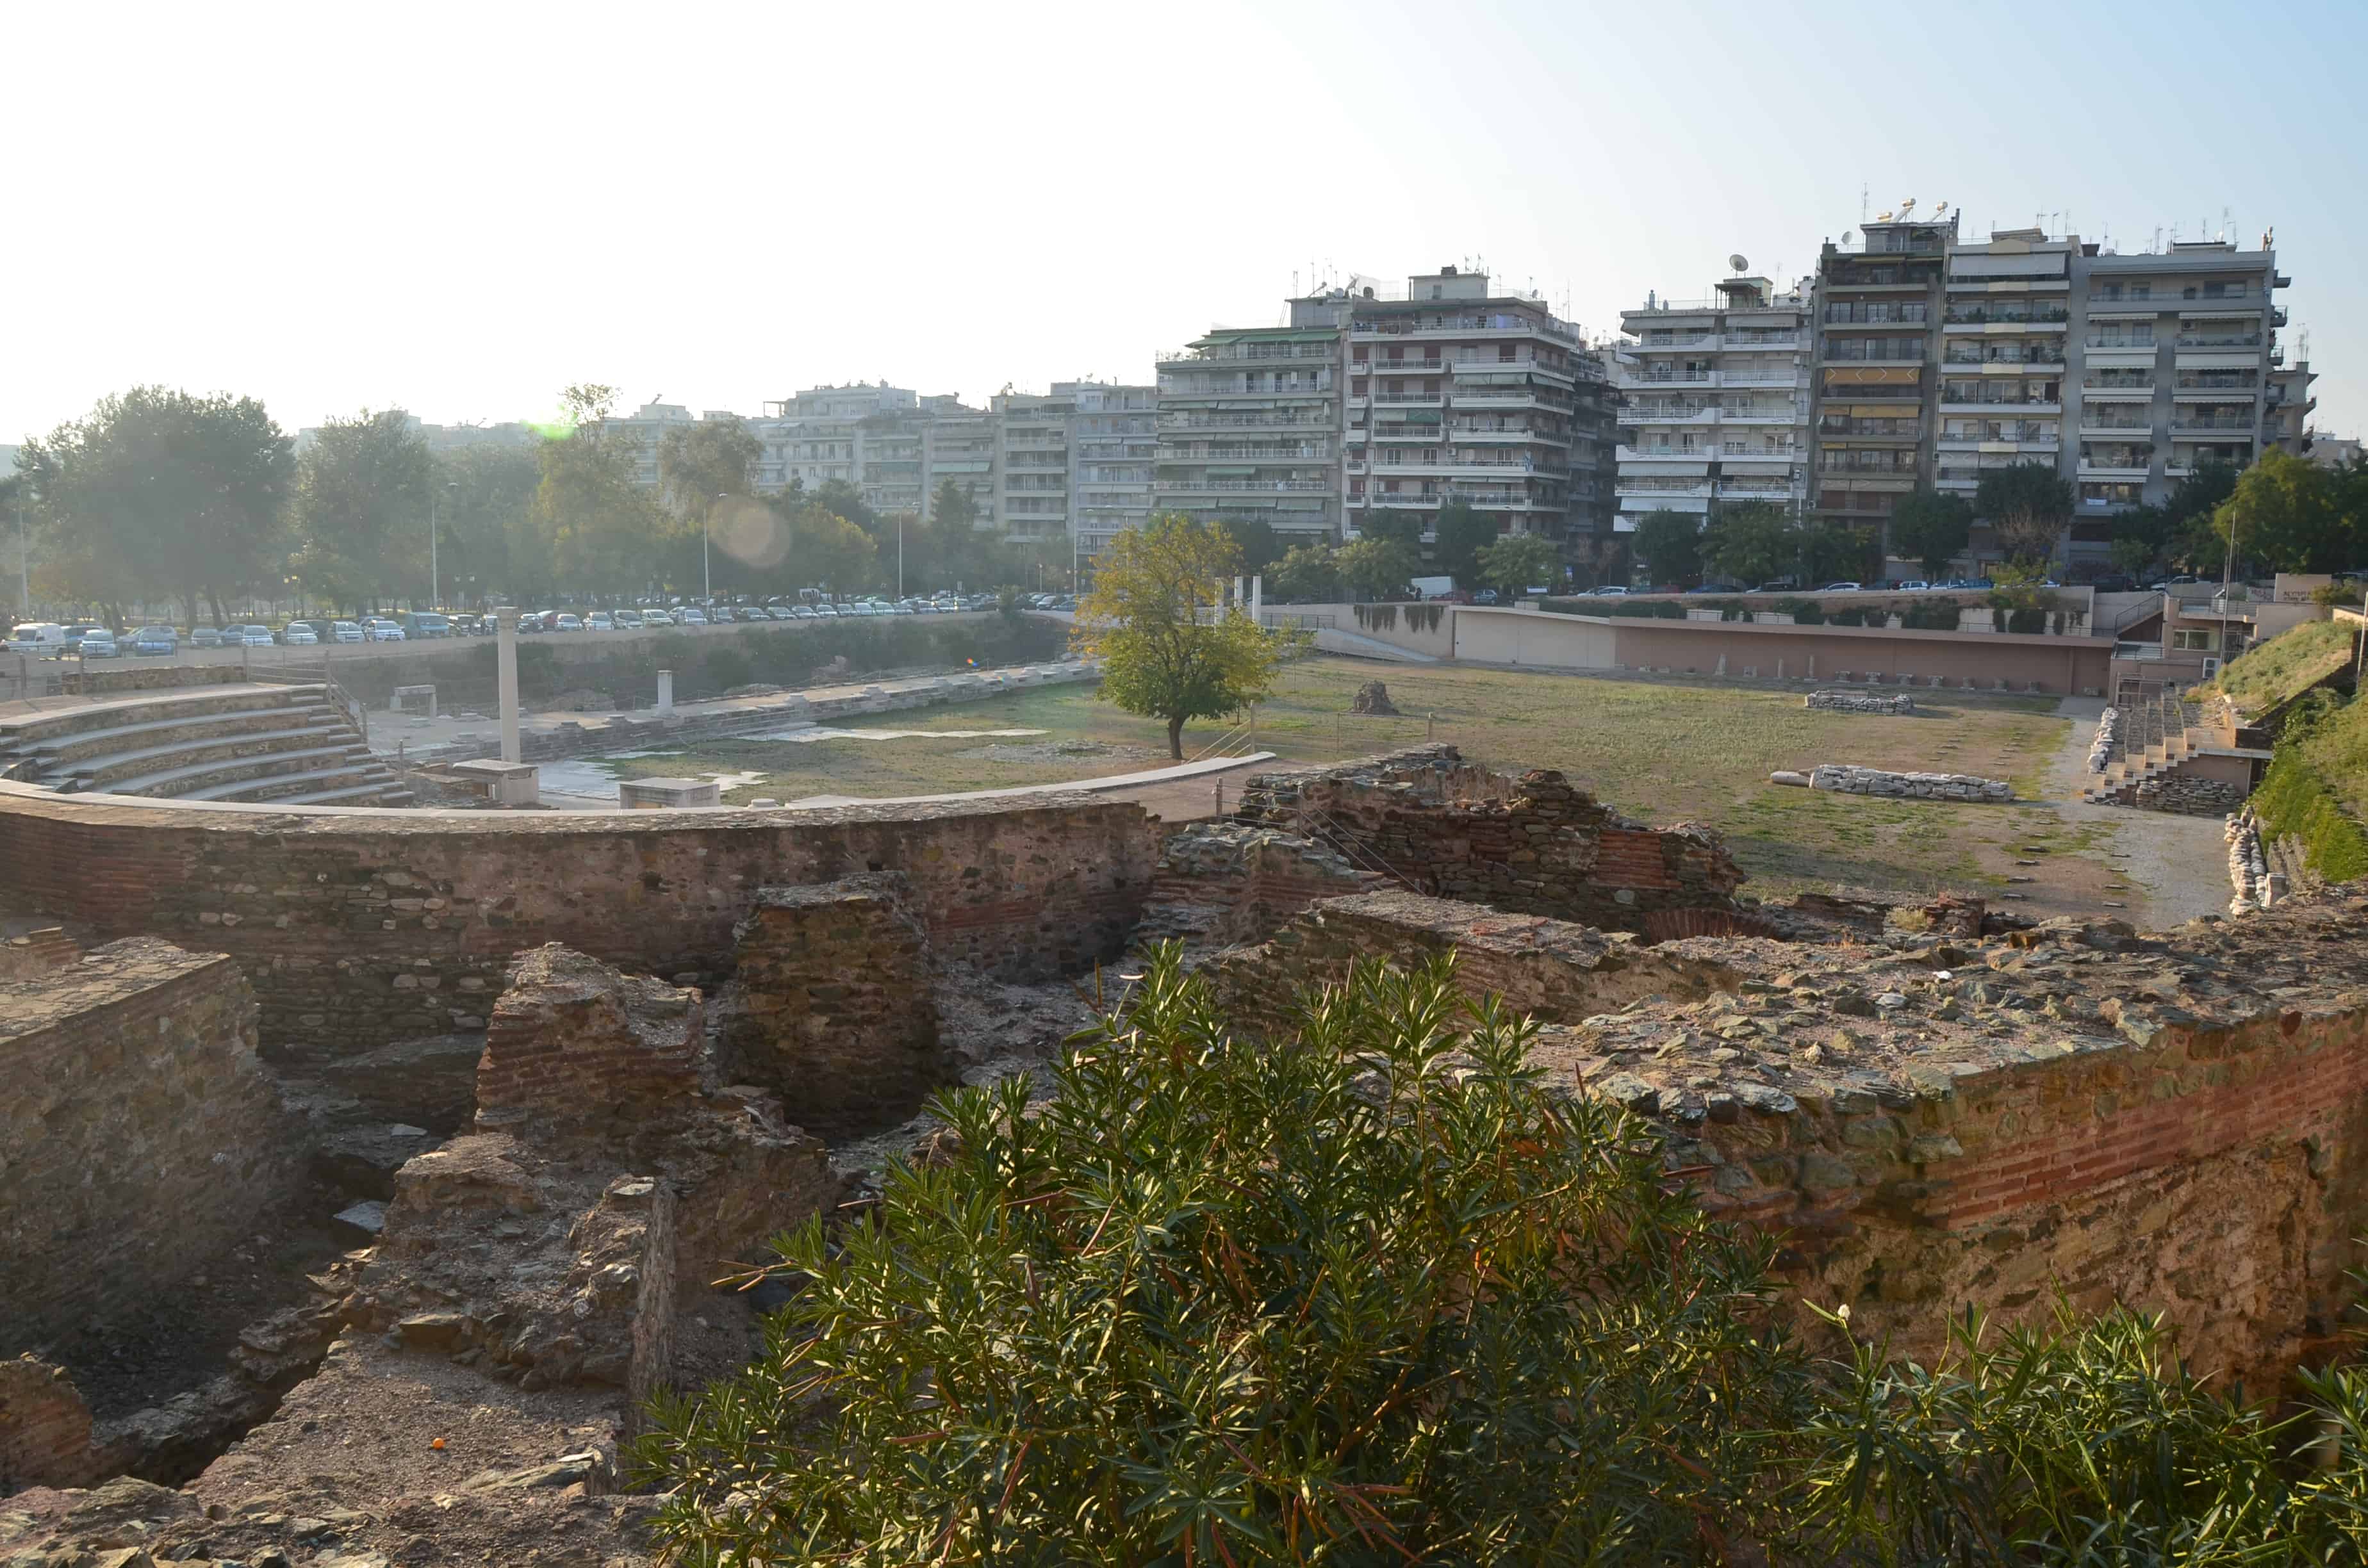 Roman Forum in Thessaloniki, Greece